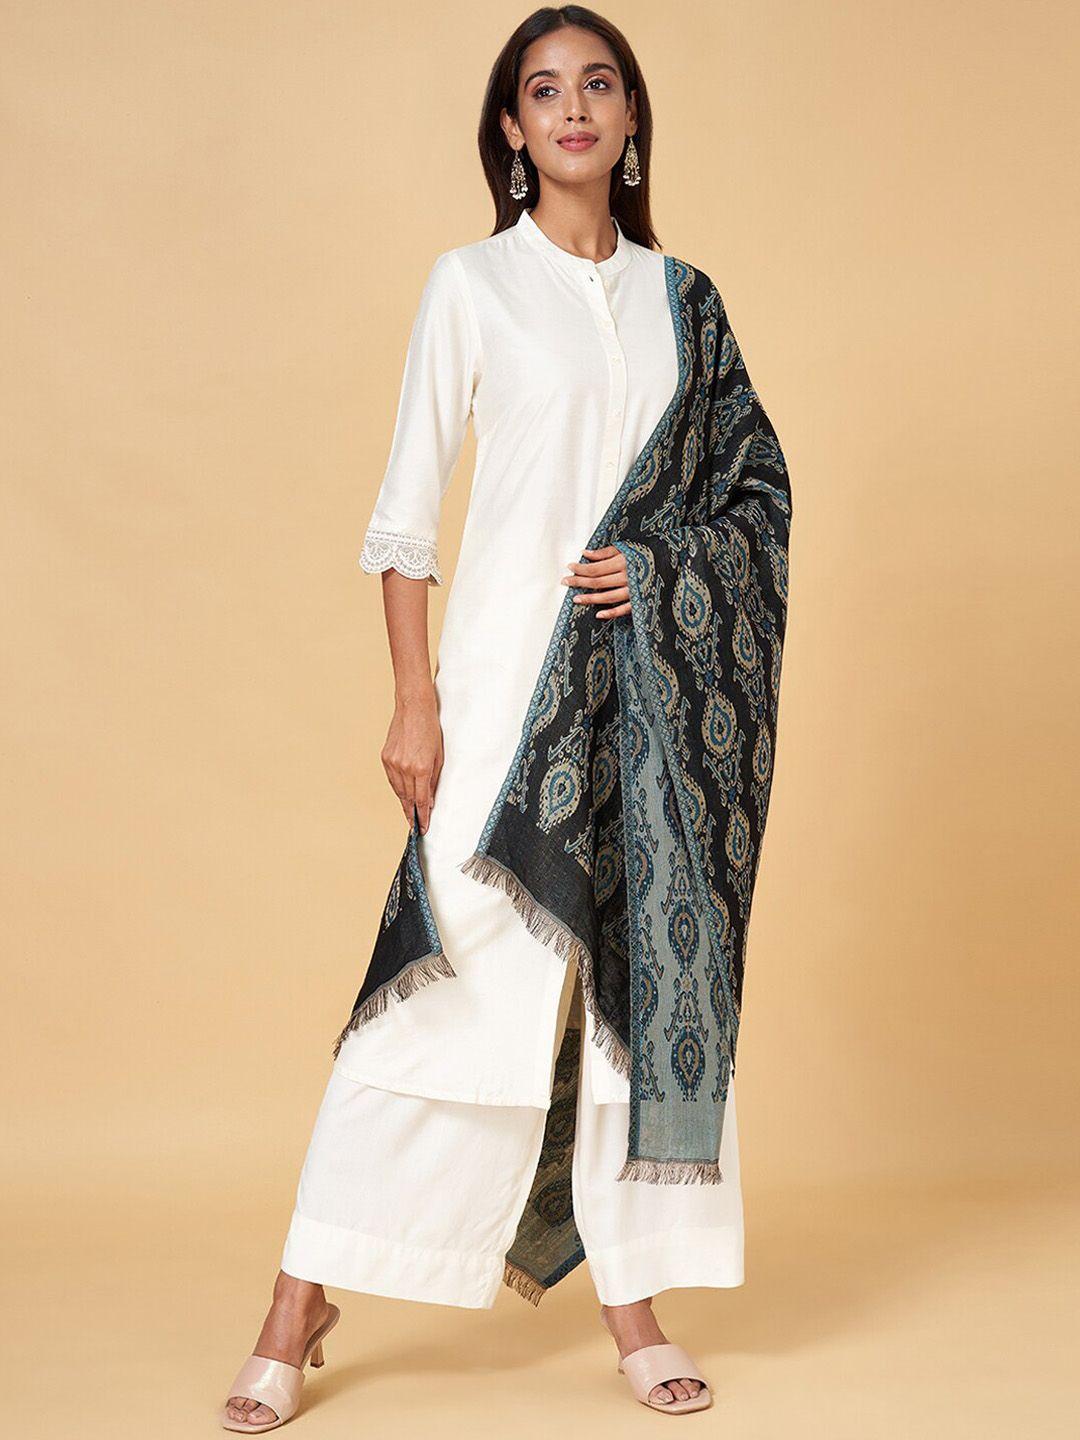 rangmanch by pantaloons woven designed acrylic shawl